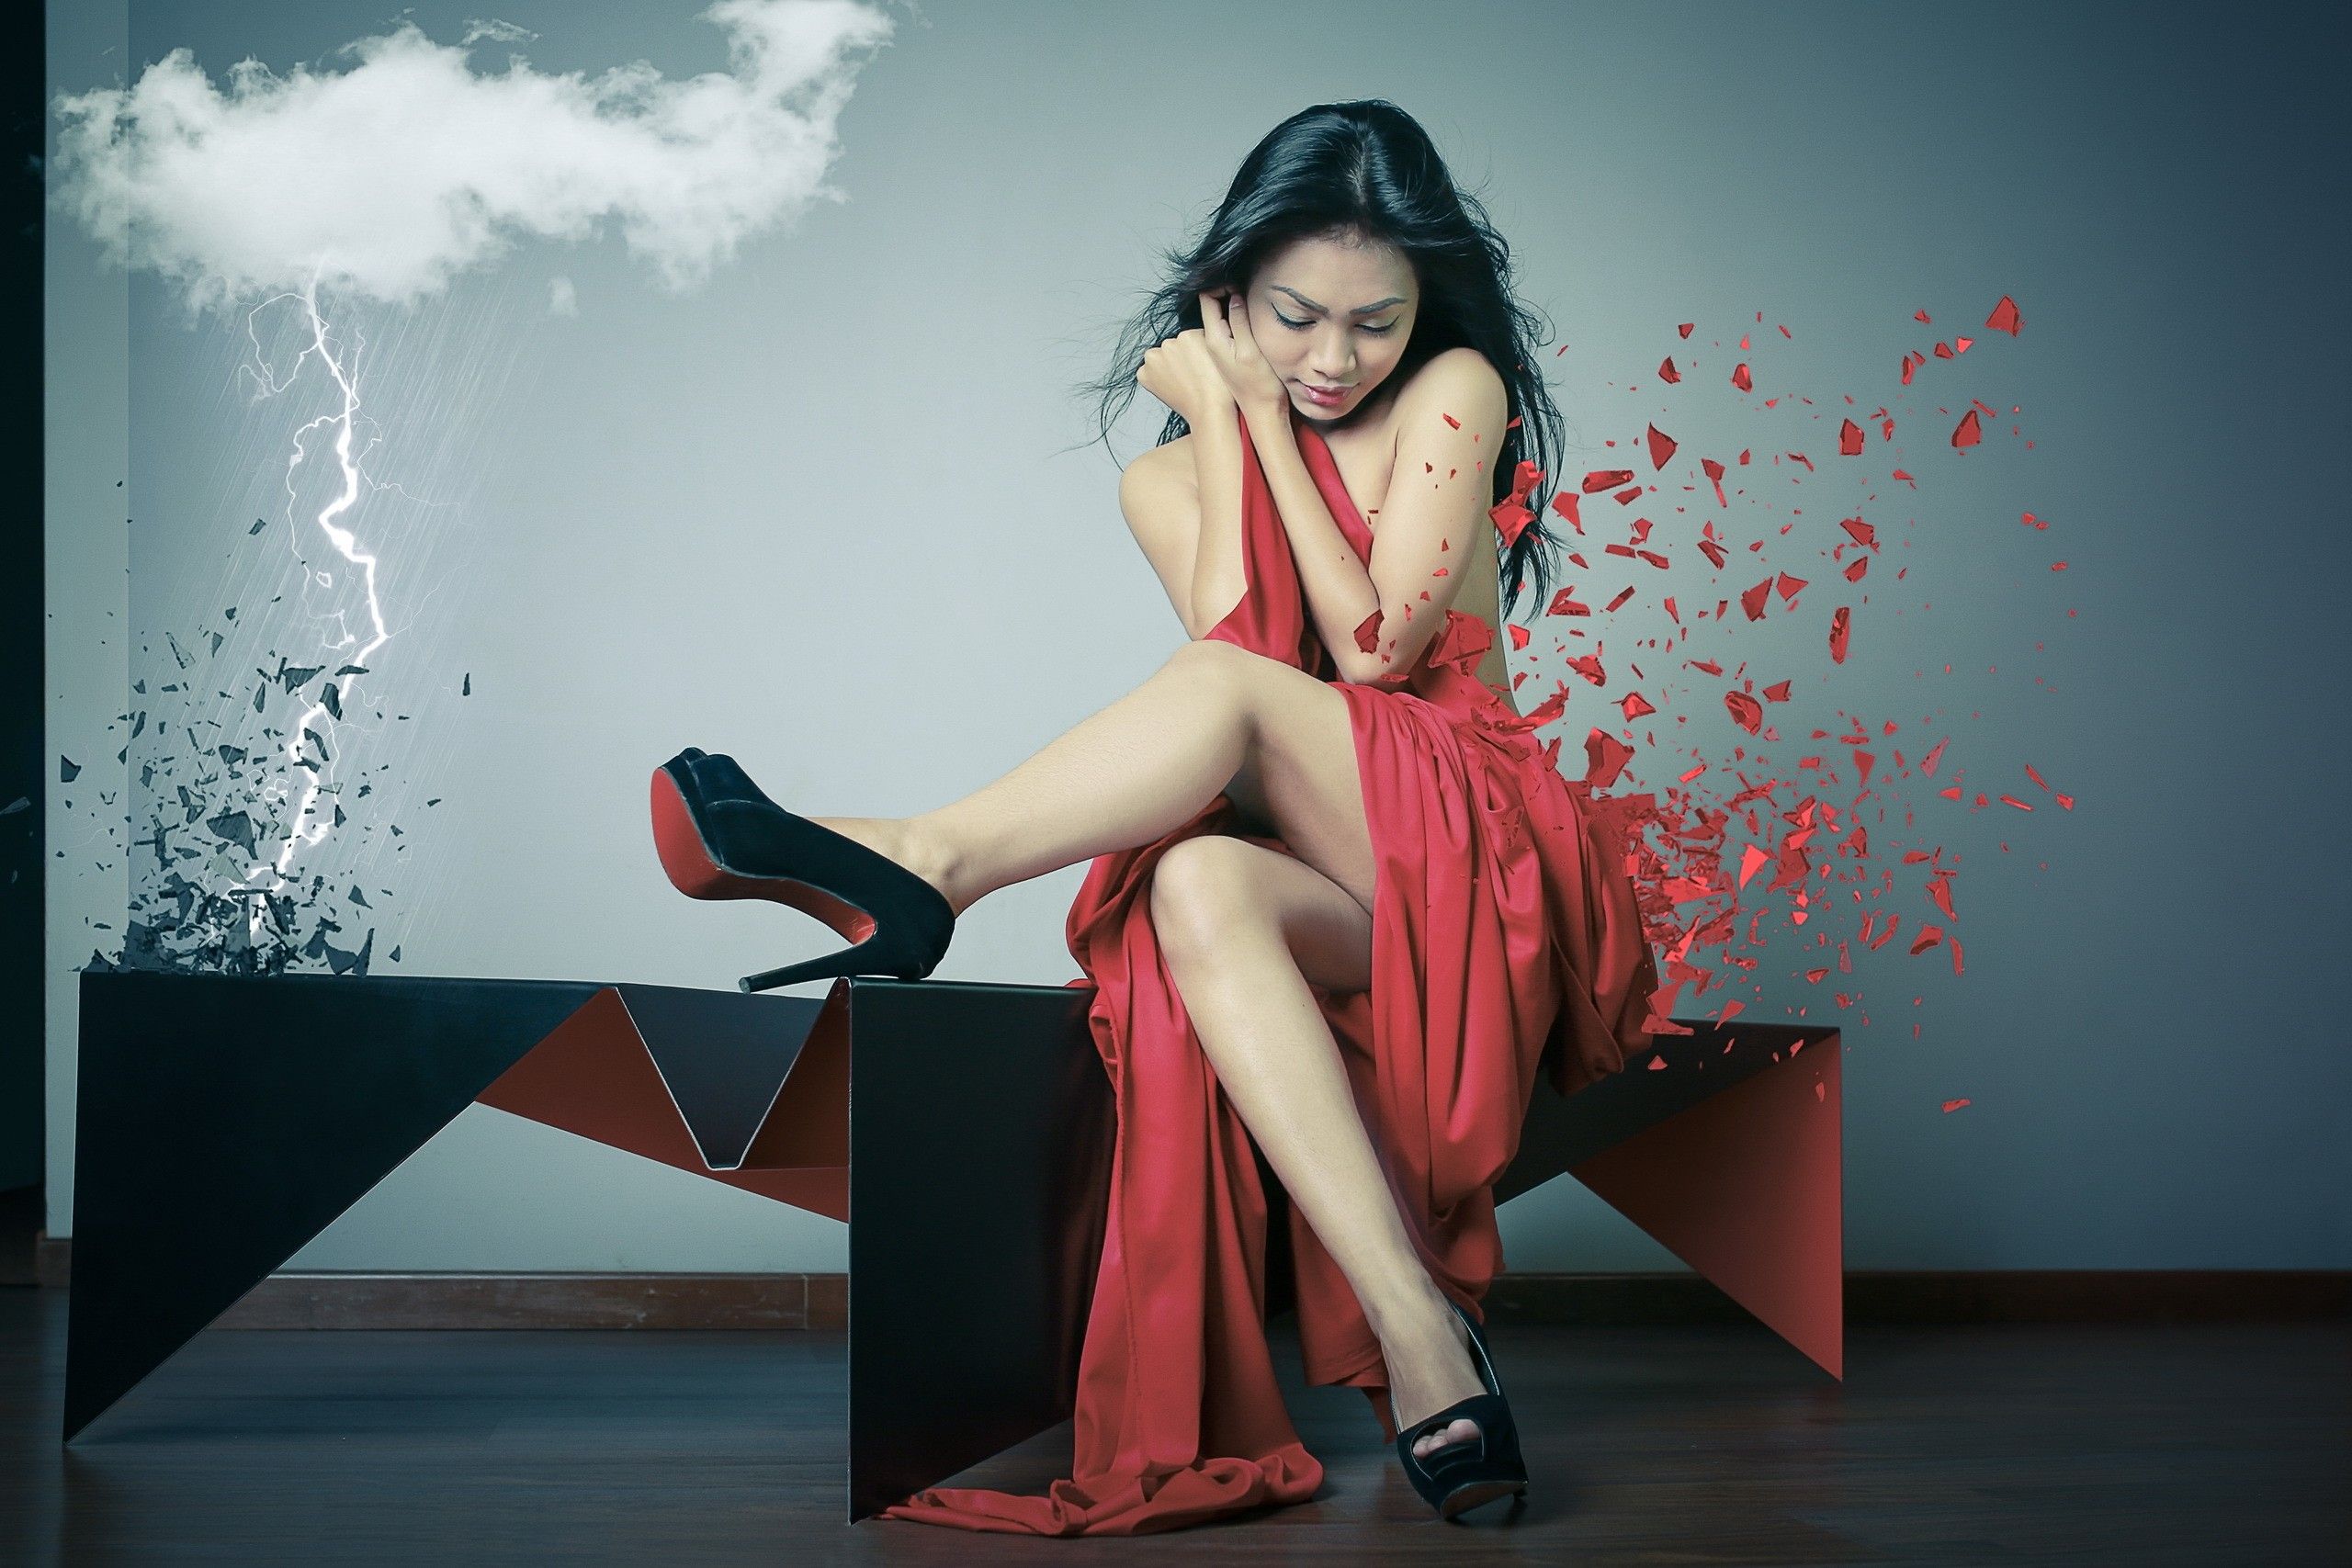 asian, high heels, Louboutin, legs, bare shoulders, sitting, photo manipulation, red dress, women wallpaper